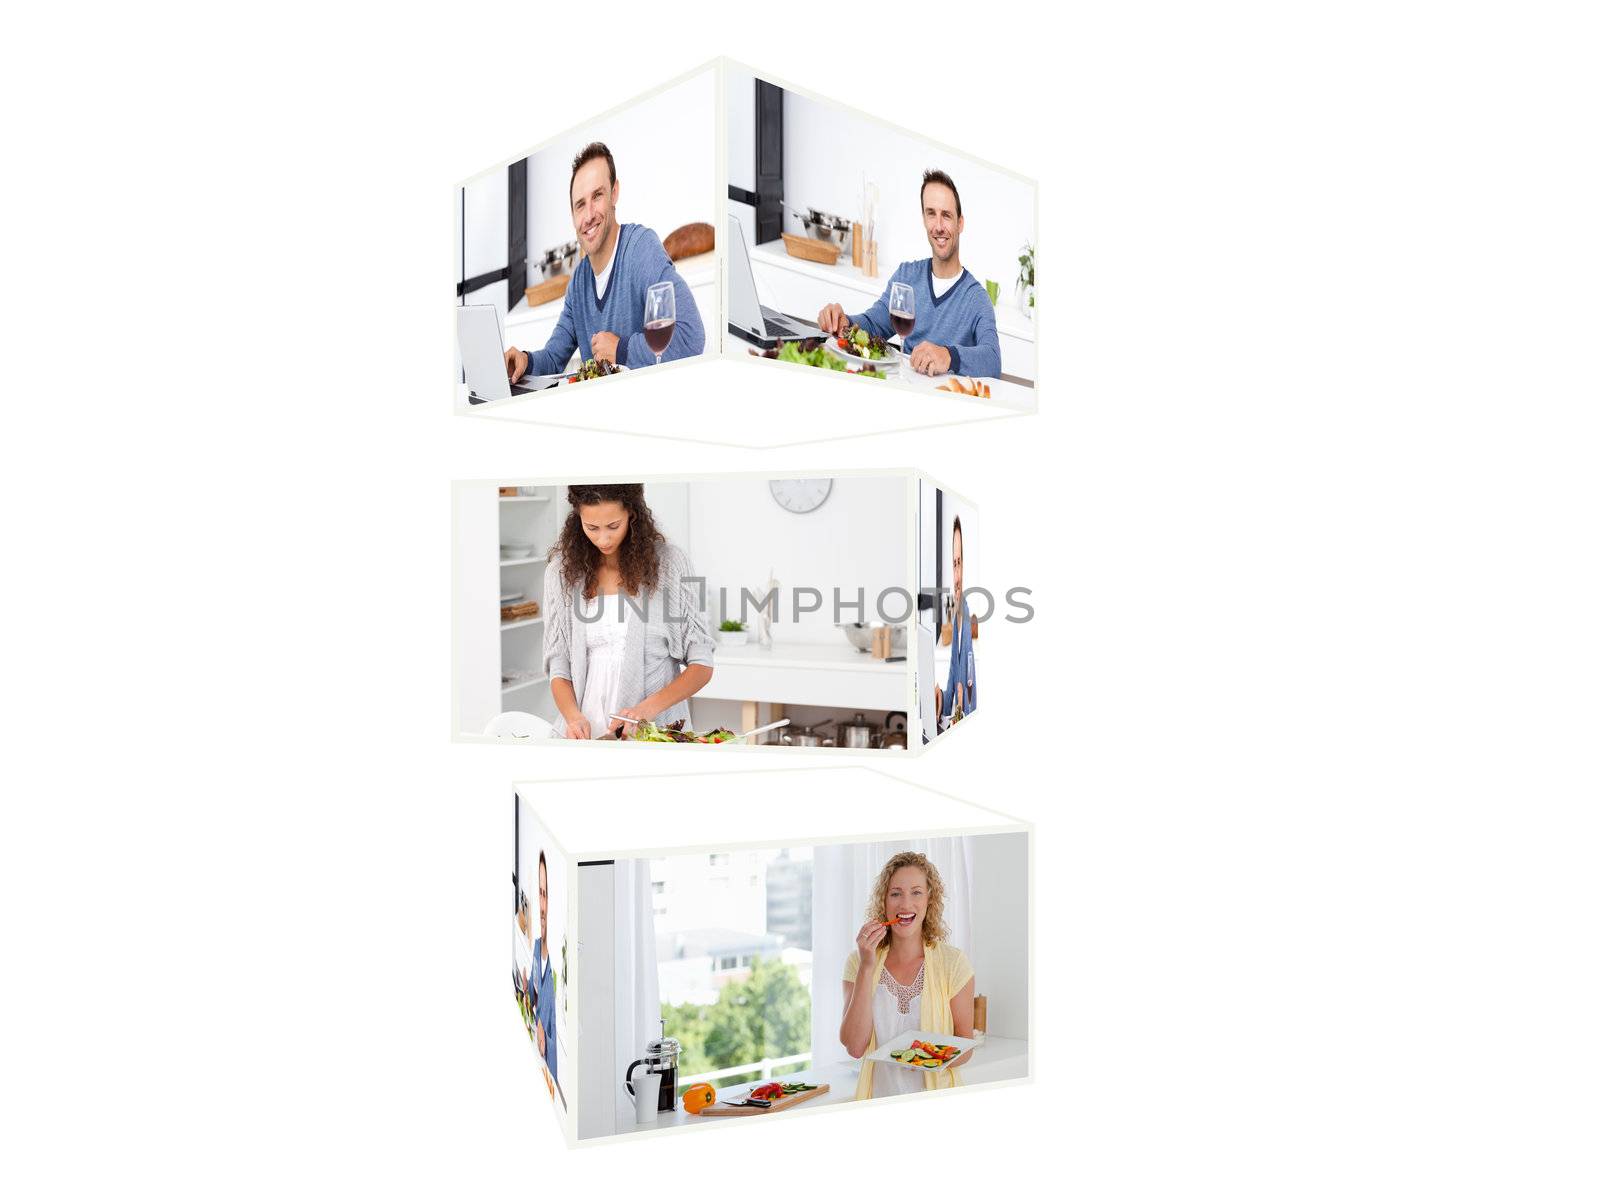 Montage of people enjoying in their kitchen by Wavebreakmedia